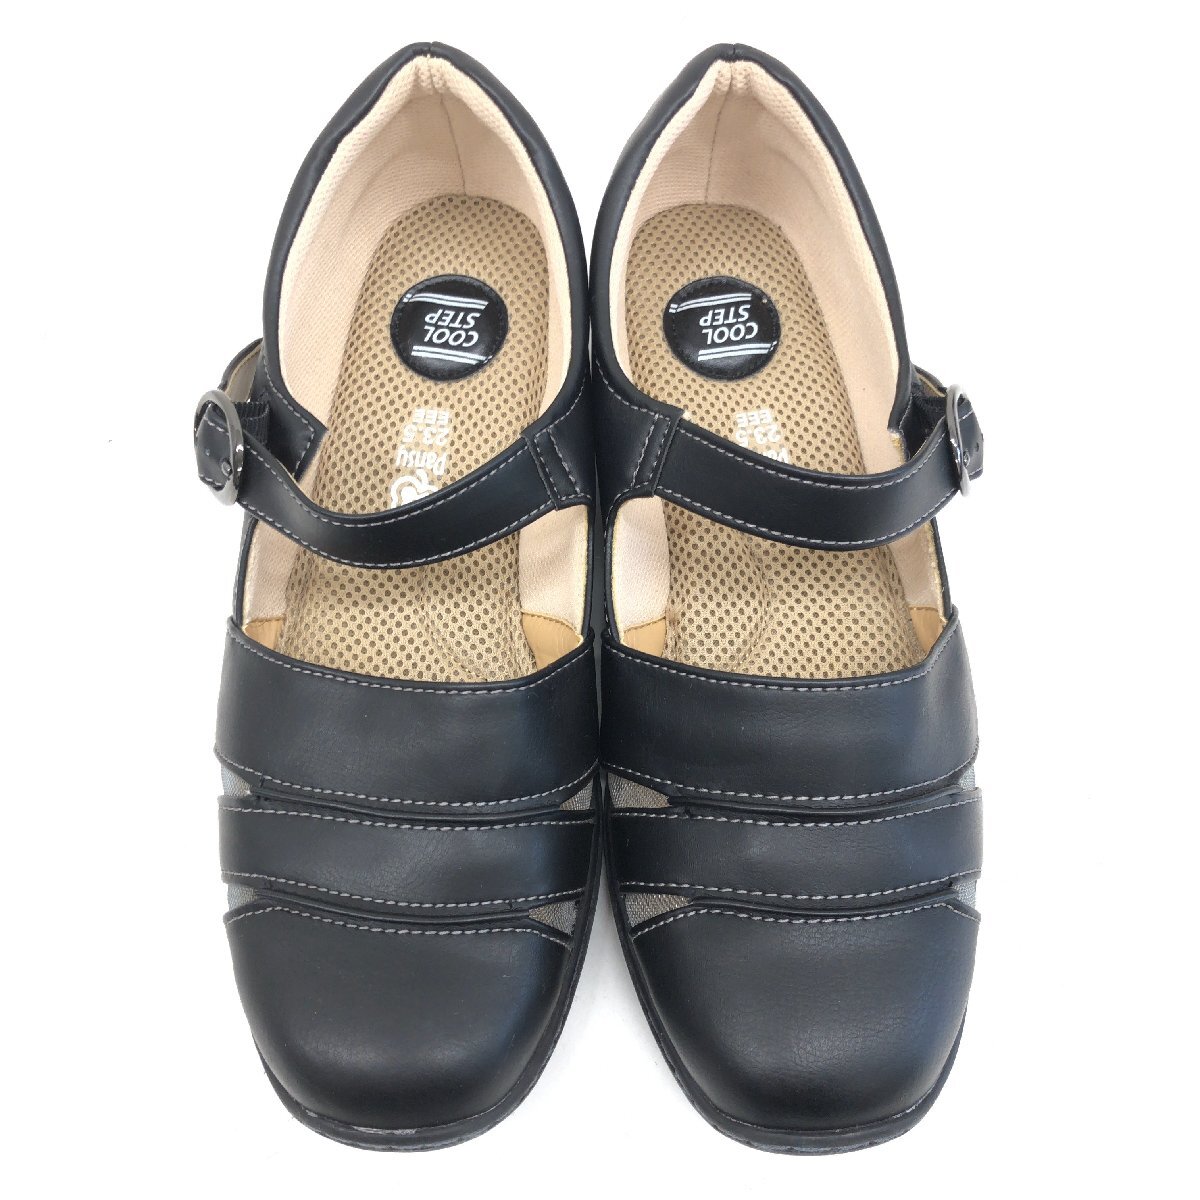 ●PANSY パンジー クールステップ 吸水速乾 エコレザー コンフォート シューズ 23.5cm EEE 黒 ブラック パンプス オフィスシューズ 健康靴の画像2